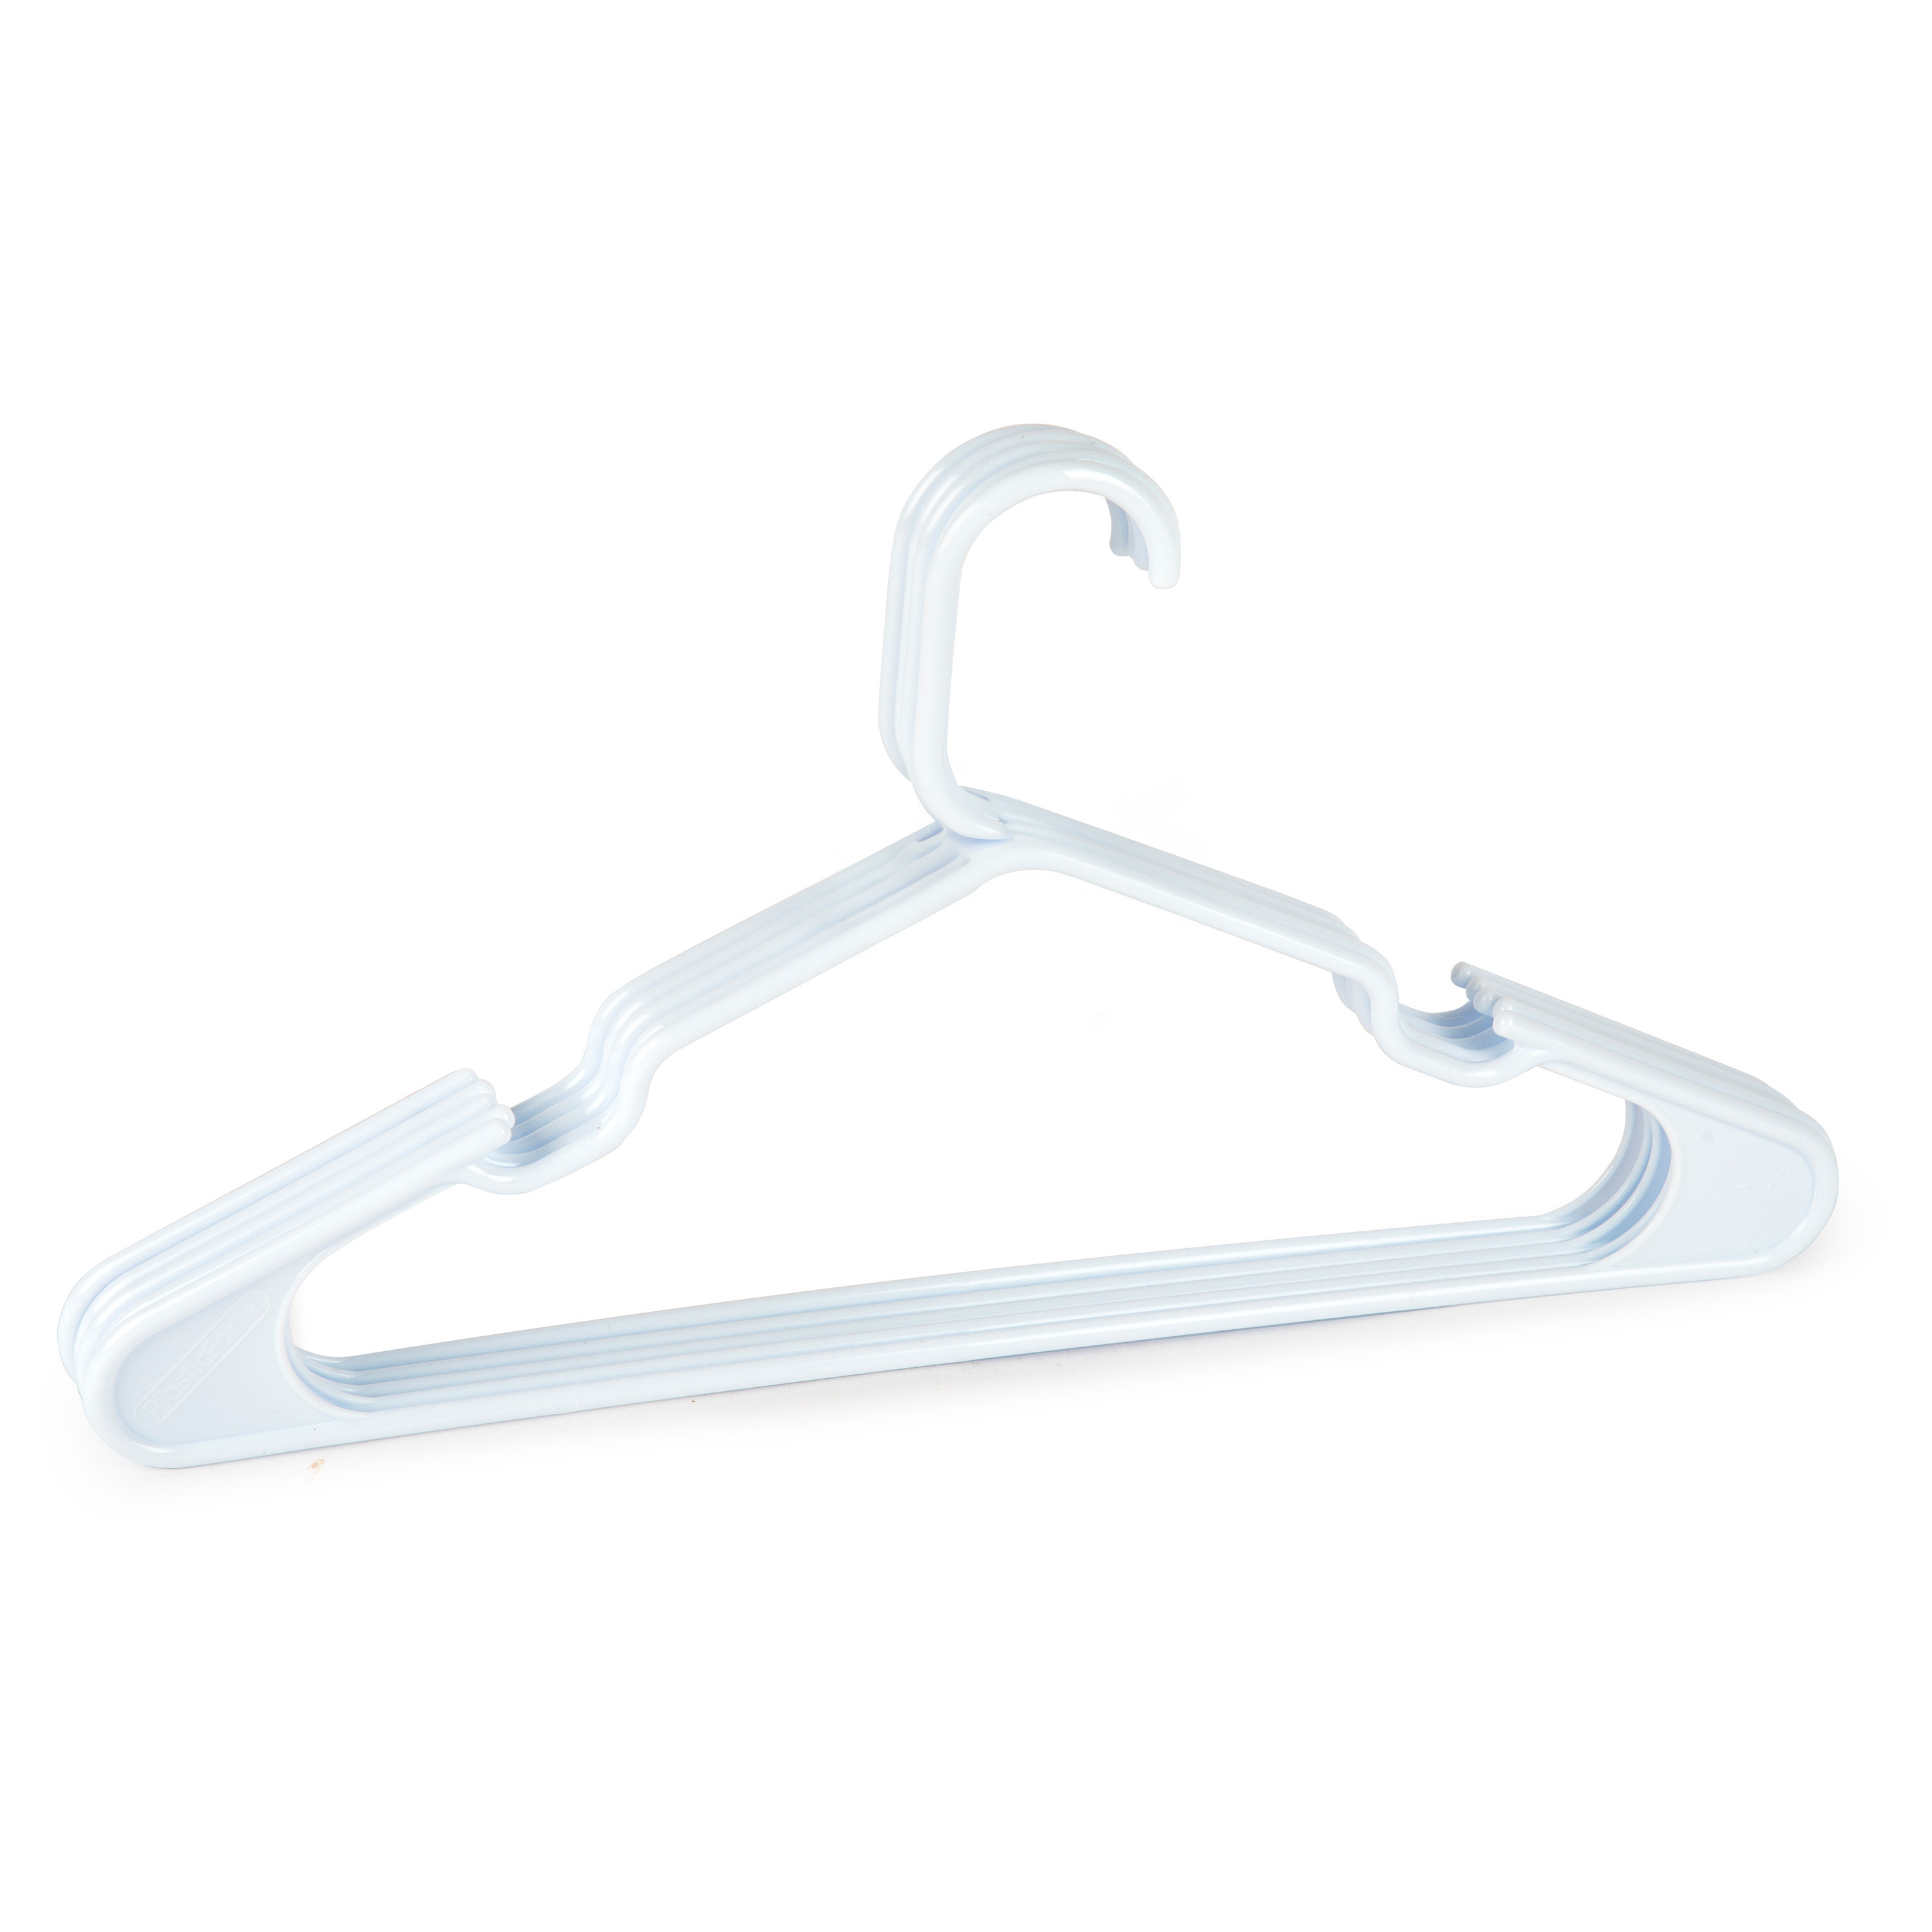 PlasticForte Kledinghangers set - 10x stuks - wit- kunststof - x 23 cm - kledingkast hangers/kleerhangers -